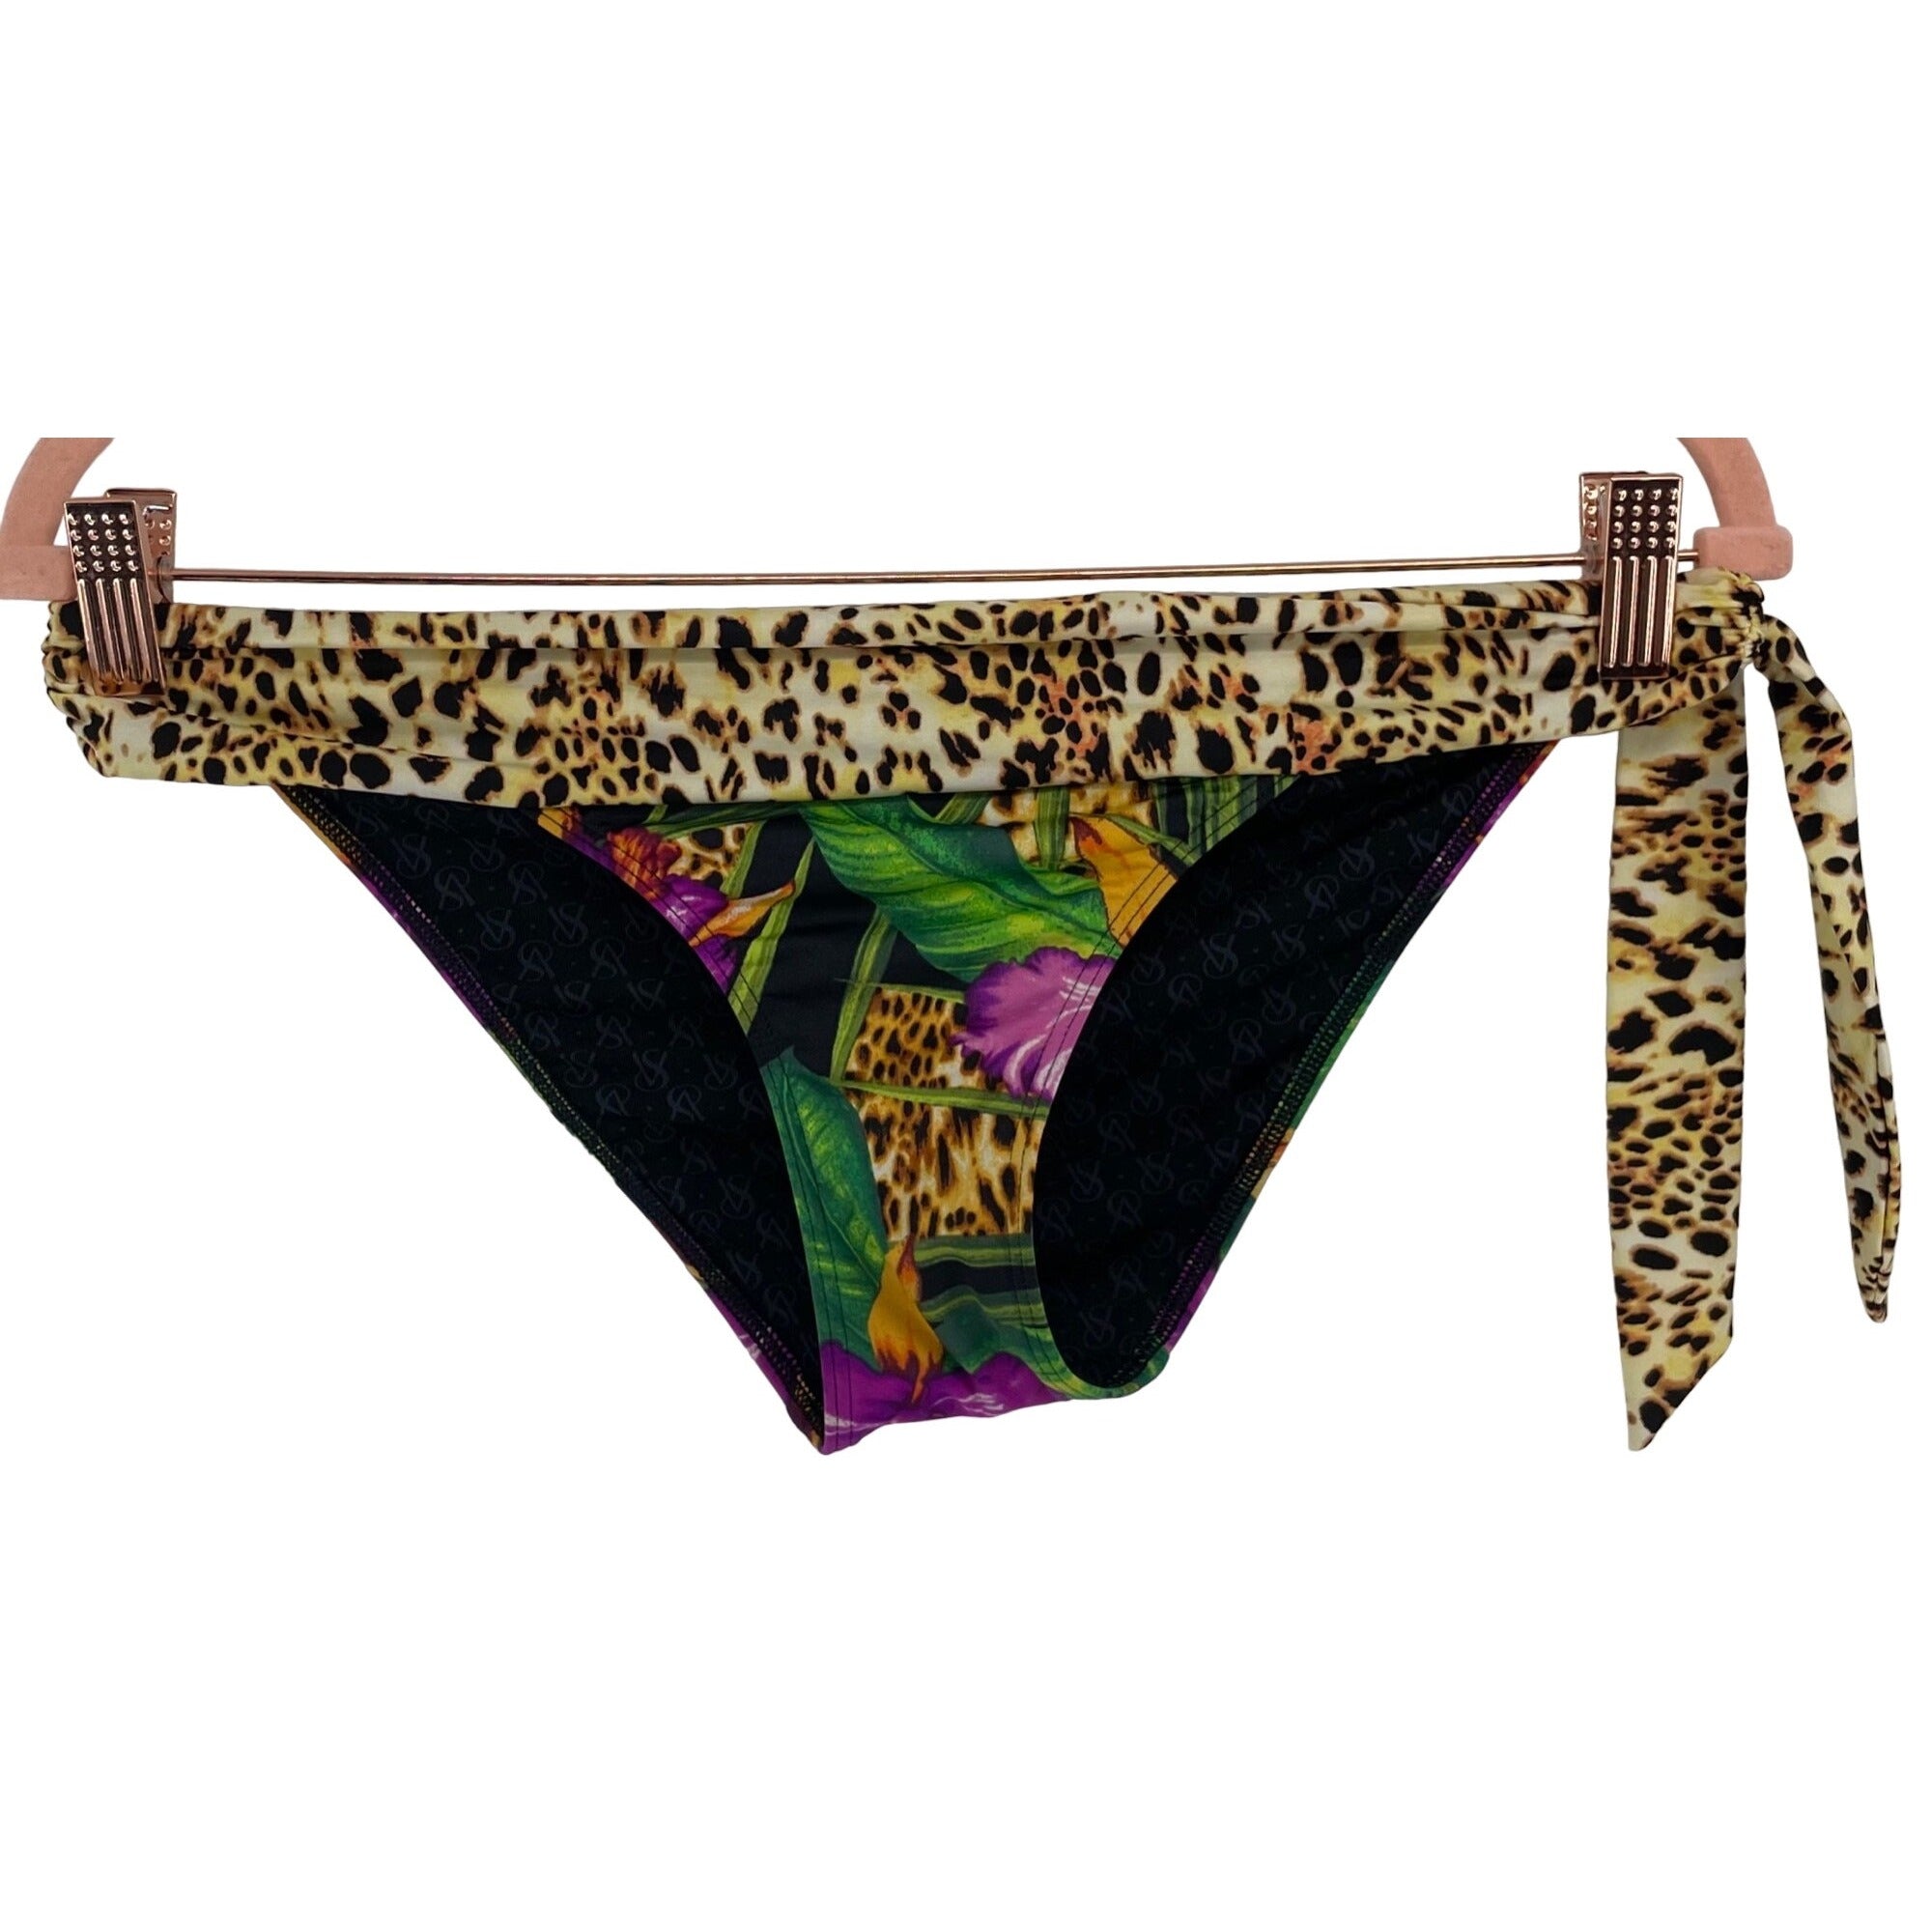 Victoria's Secret Women's Size Small Leopard Print Multi-Colored Swimsuit Bottoms